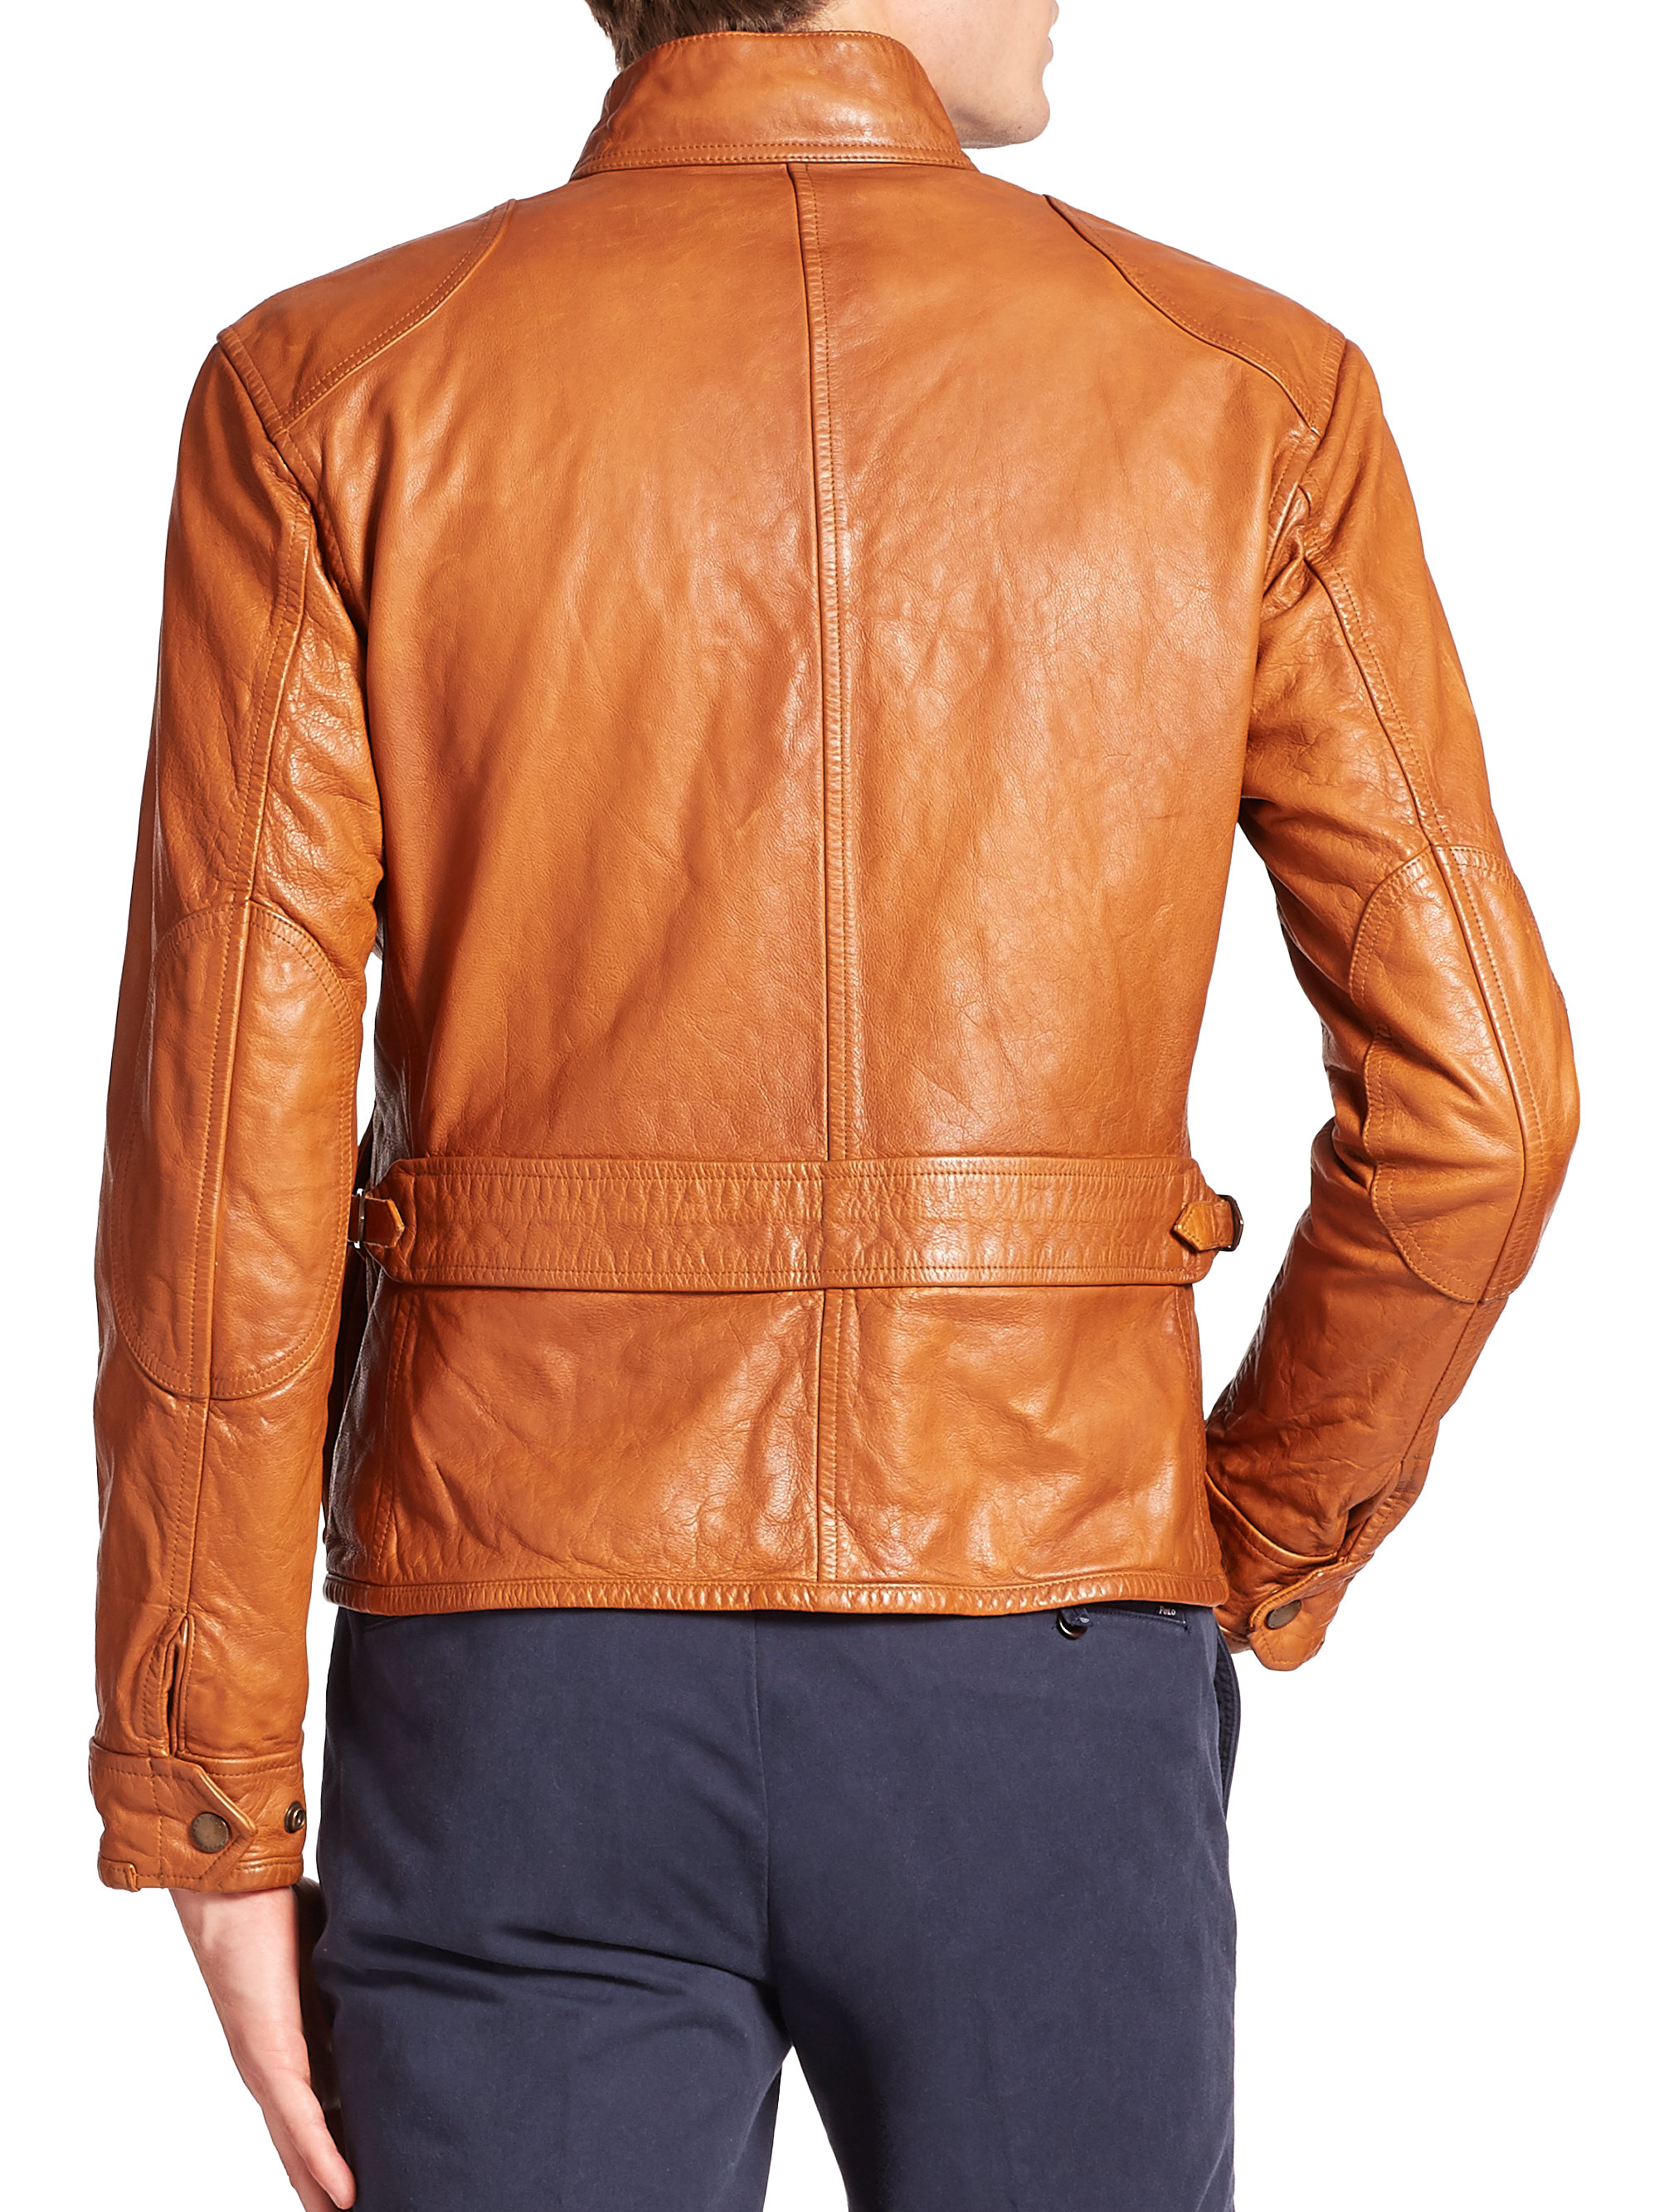 Lyst - Polo Ralph Lauren Southbury Leather Biker Jacket in Brown for Men